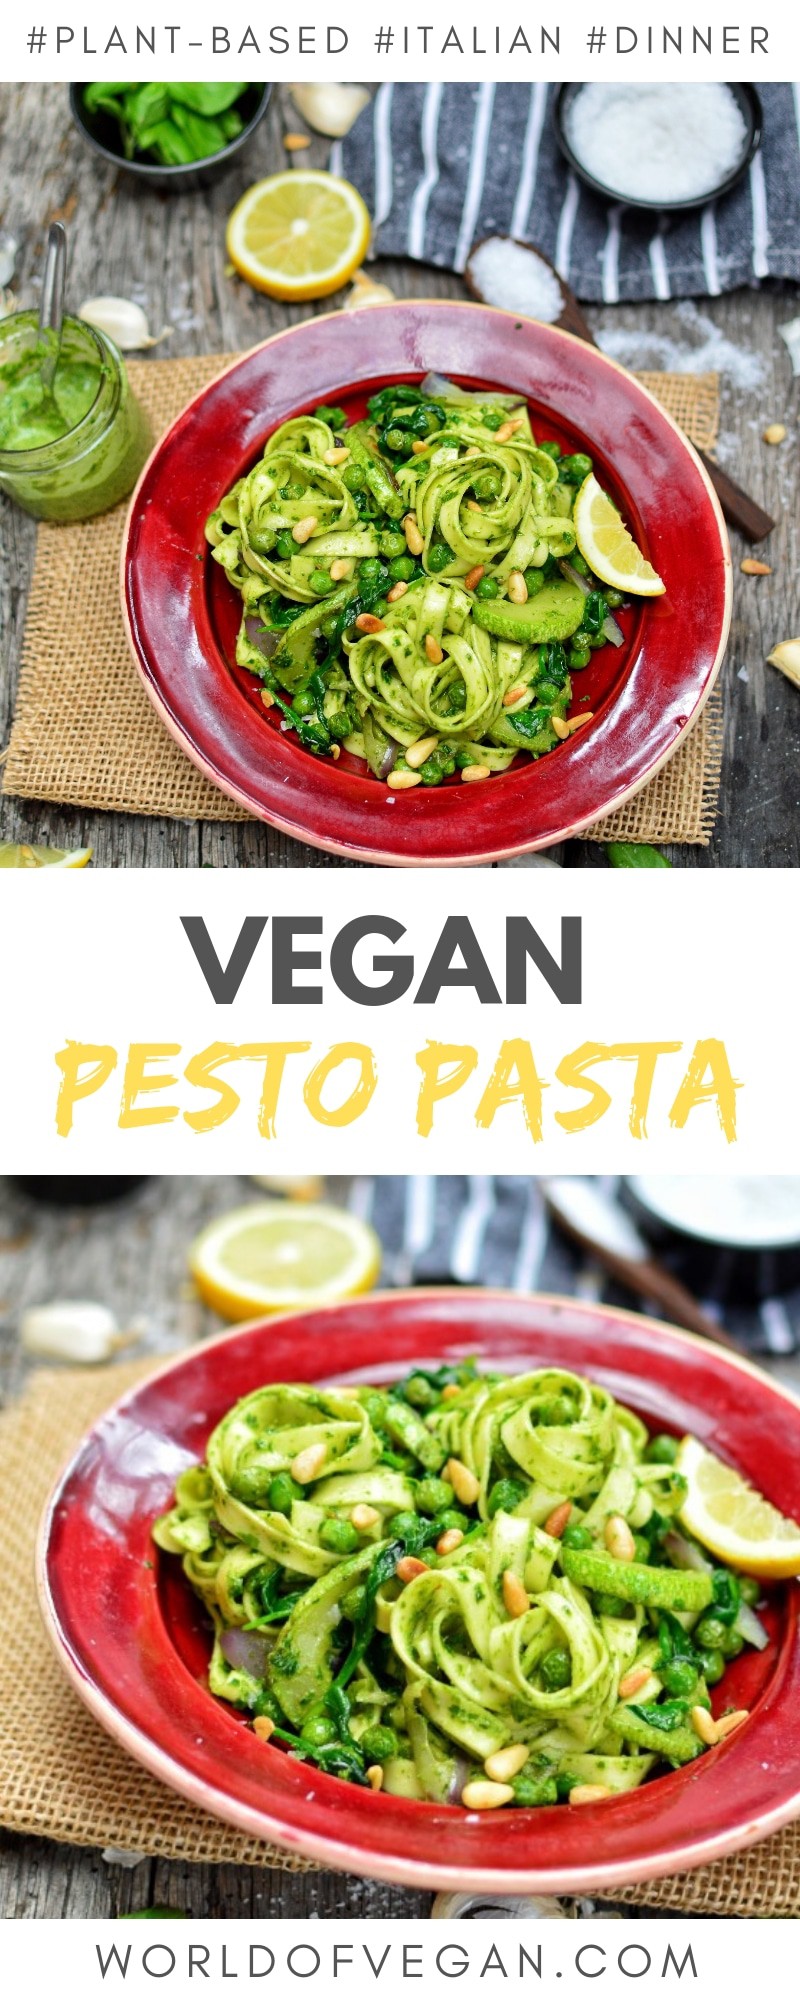 Vegan Pesto Pasta | Vegan Pesto Recipe | WorldofVegan.com | #italian #pesto #vegan #easy #recipe #pasta #basil #worldofvegan